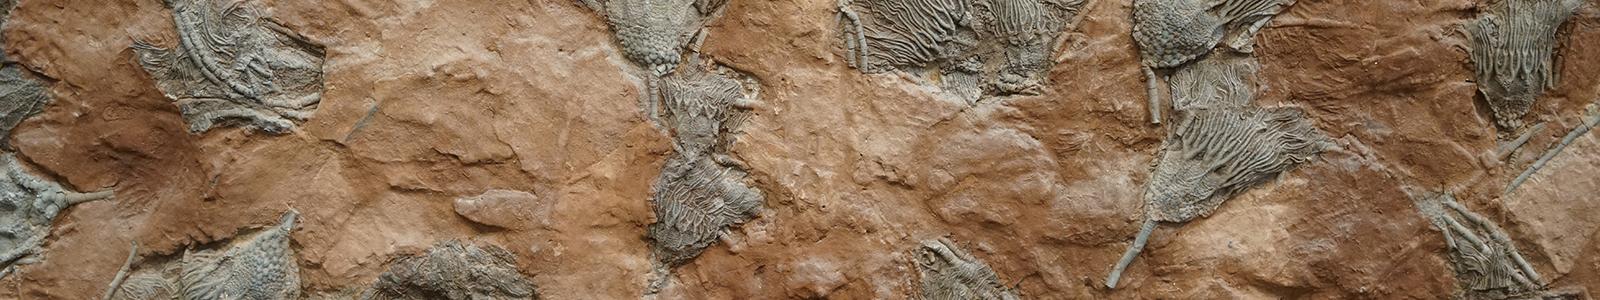 Fossil, sponge, Raphidonema faringdonense, found Faringdon, Berkshire